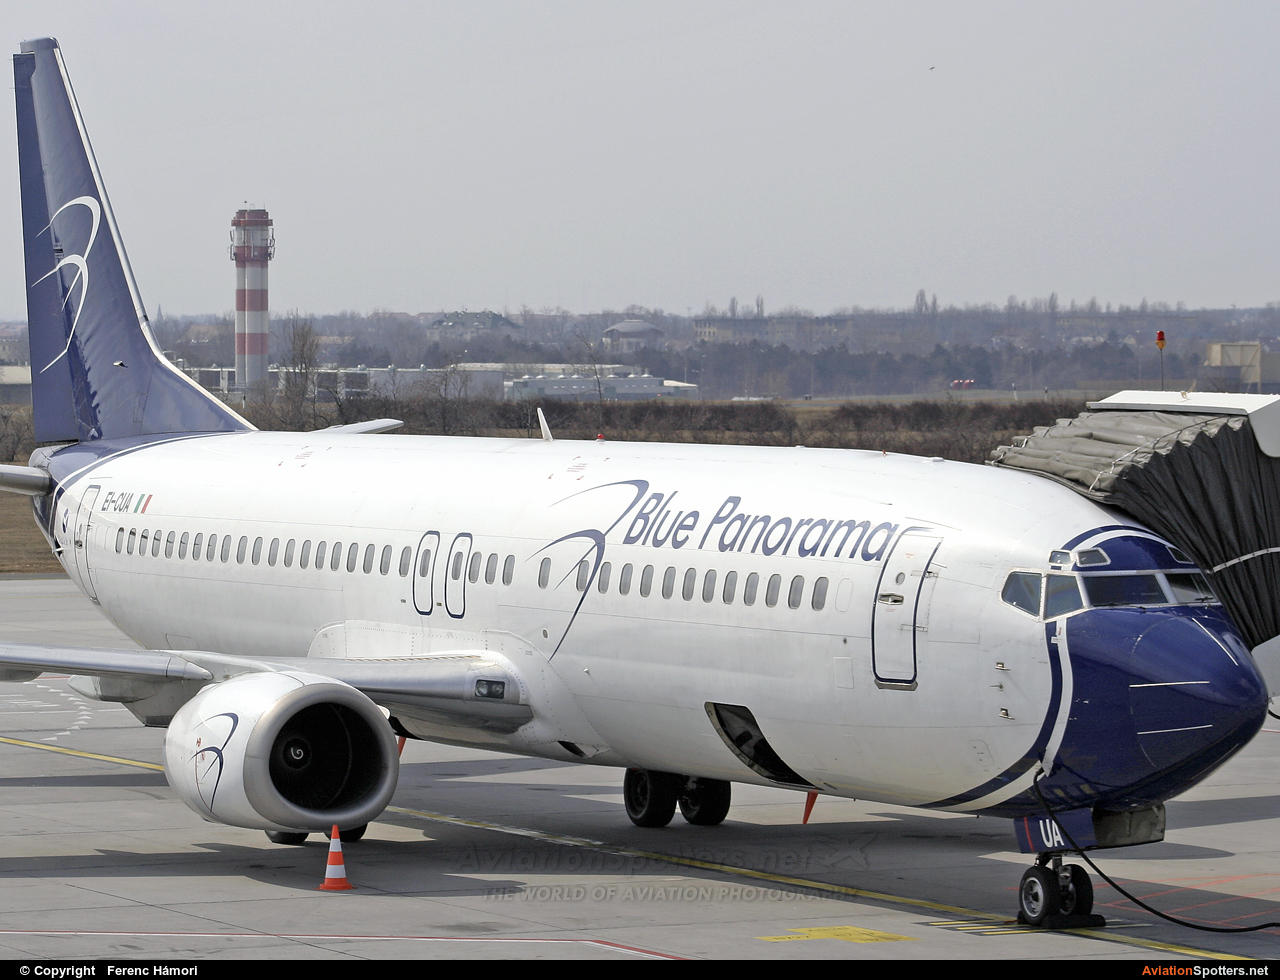 Blue Panorama Airlines  -  737-400  (EI-CUA) By Ferenc Hámori (hamori)